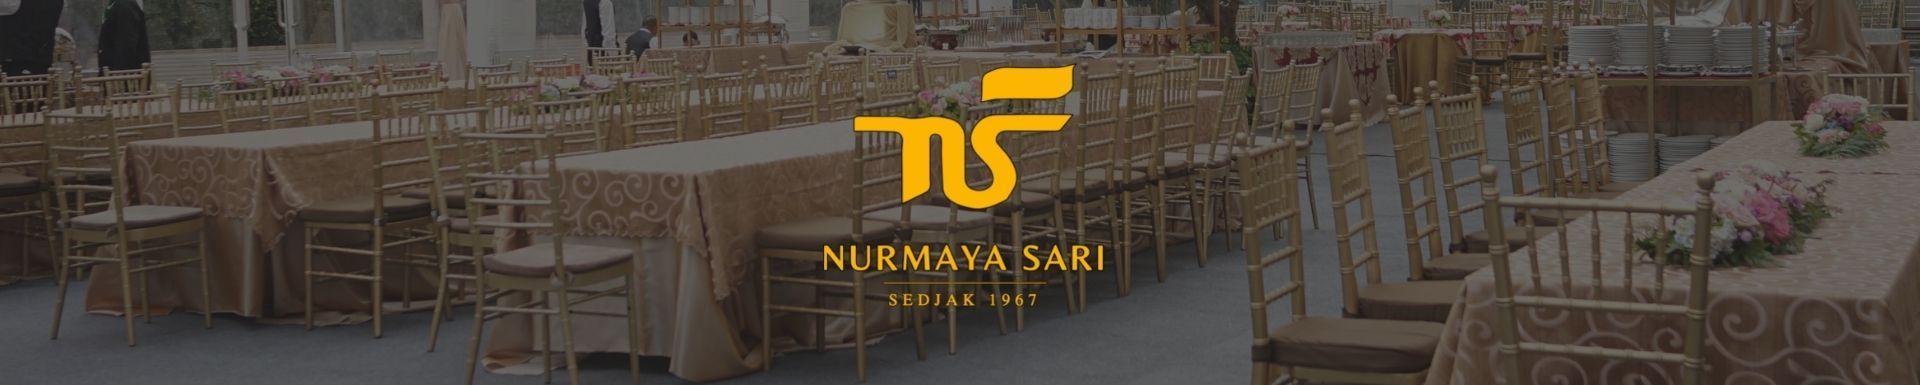 Nurmaya Sari Catering